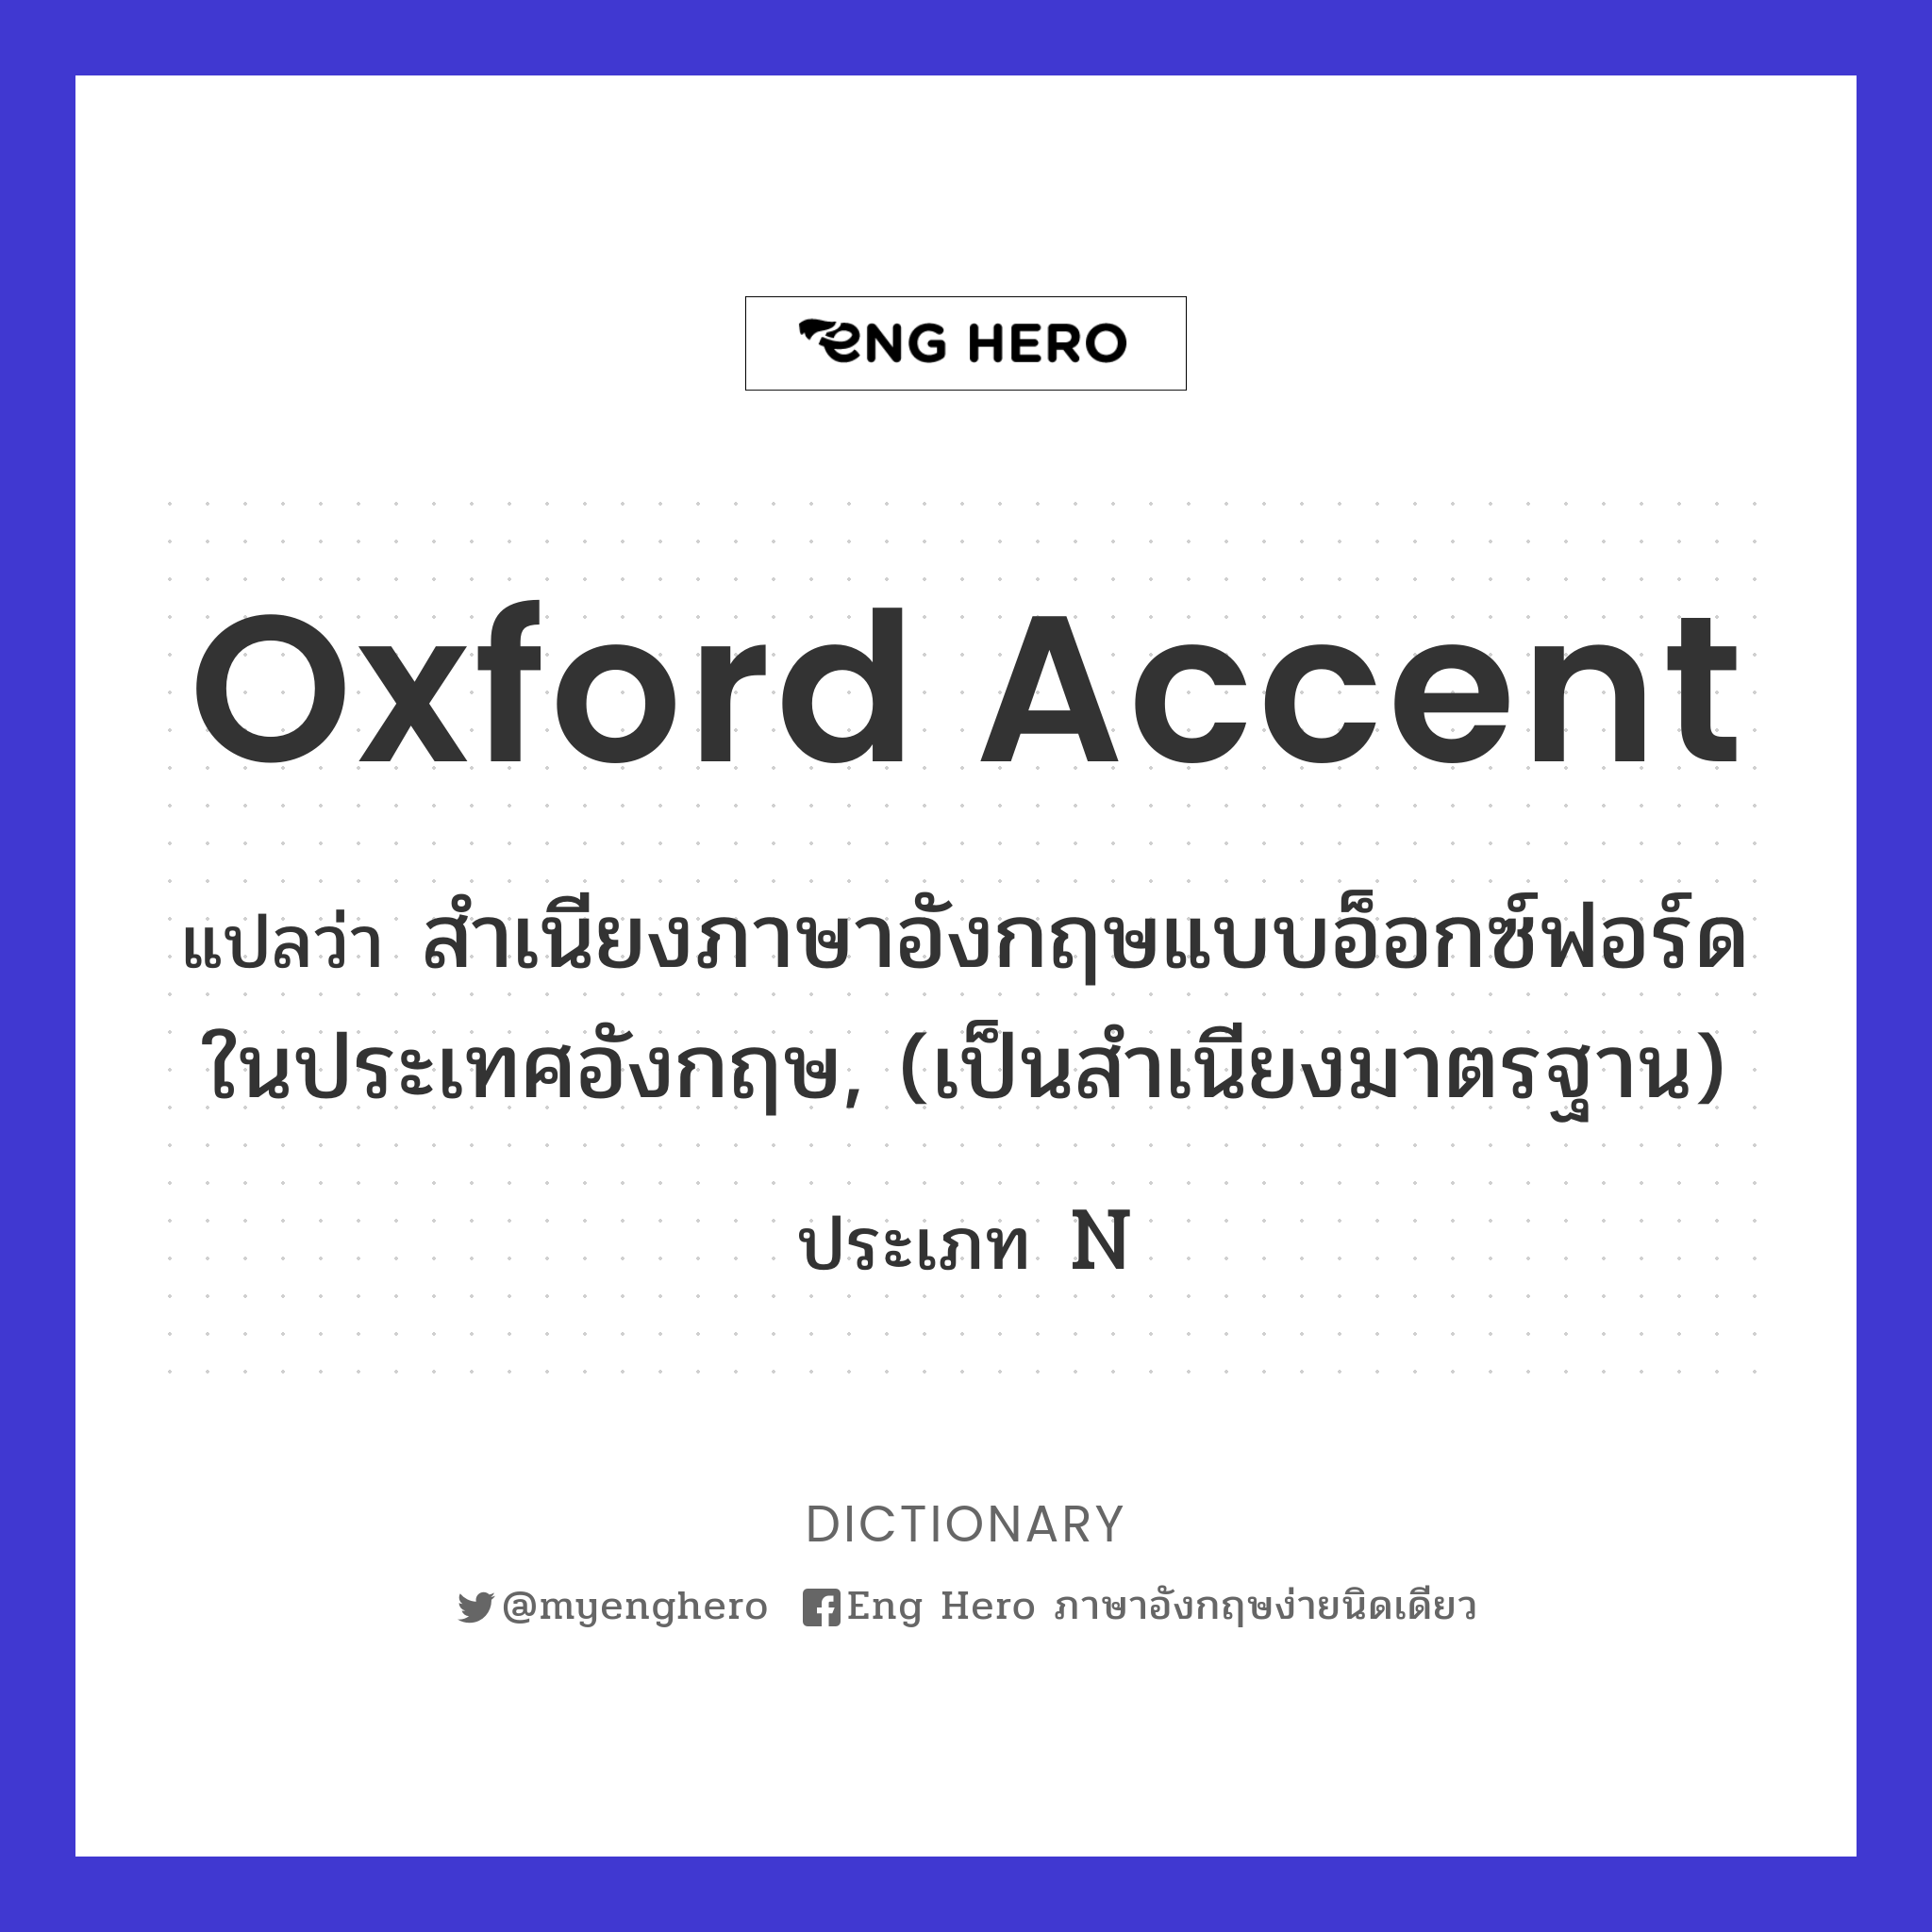 Oxford accent